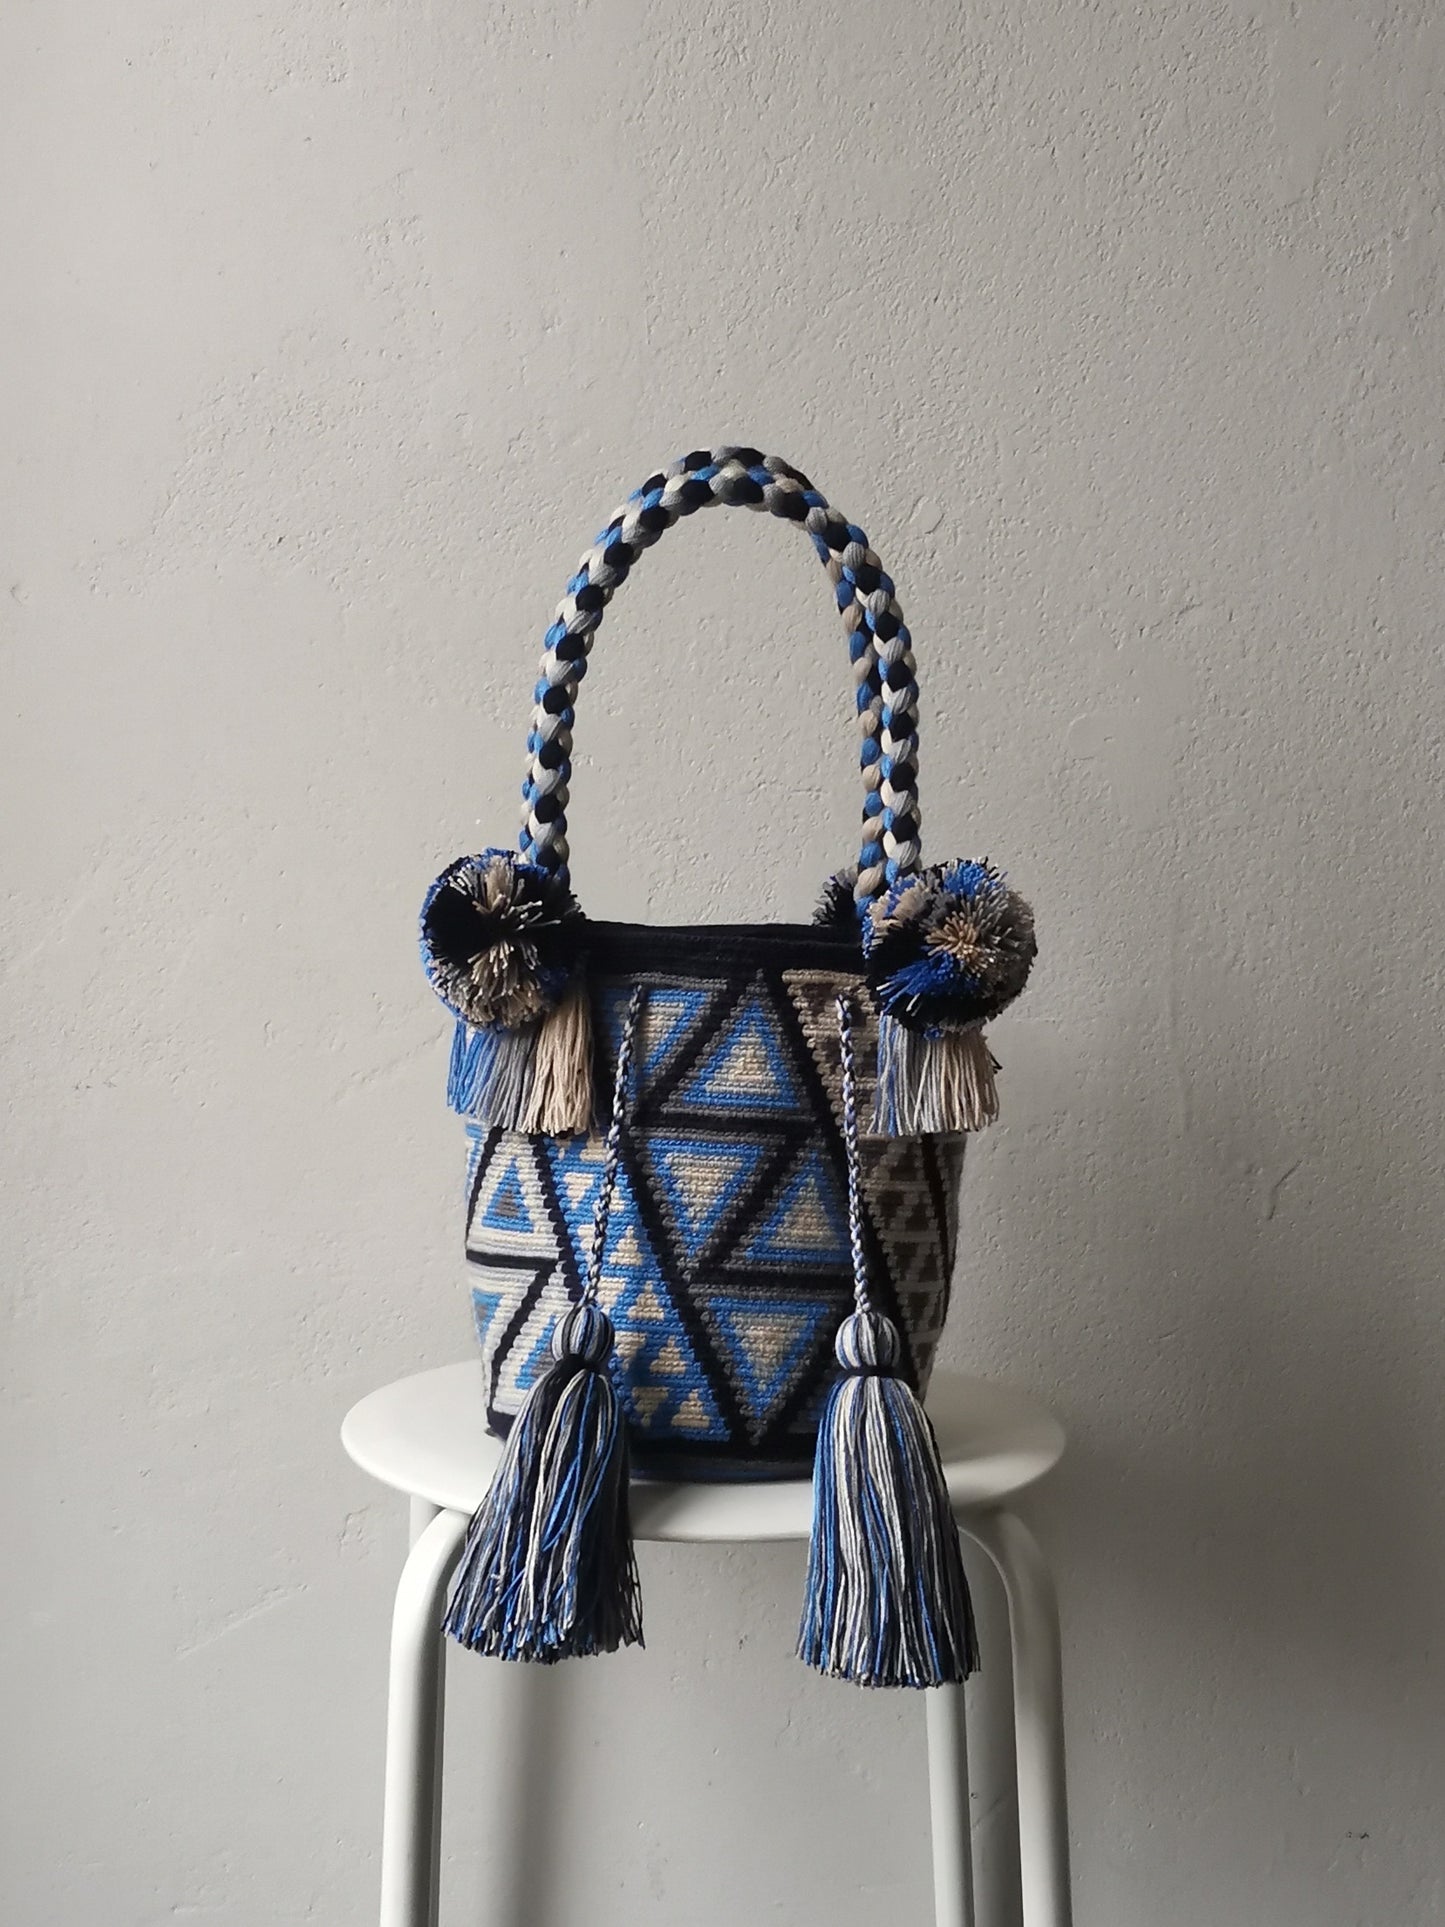 M blue and gray mochila handbag